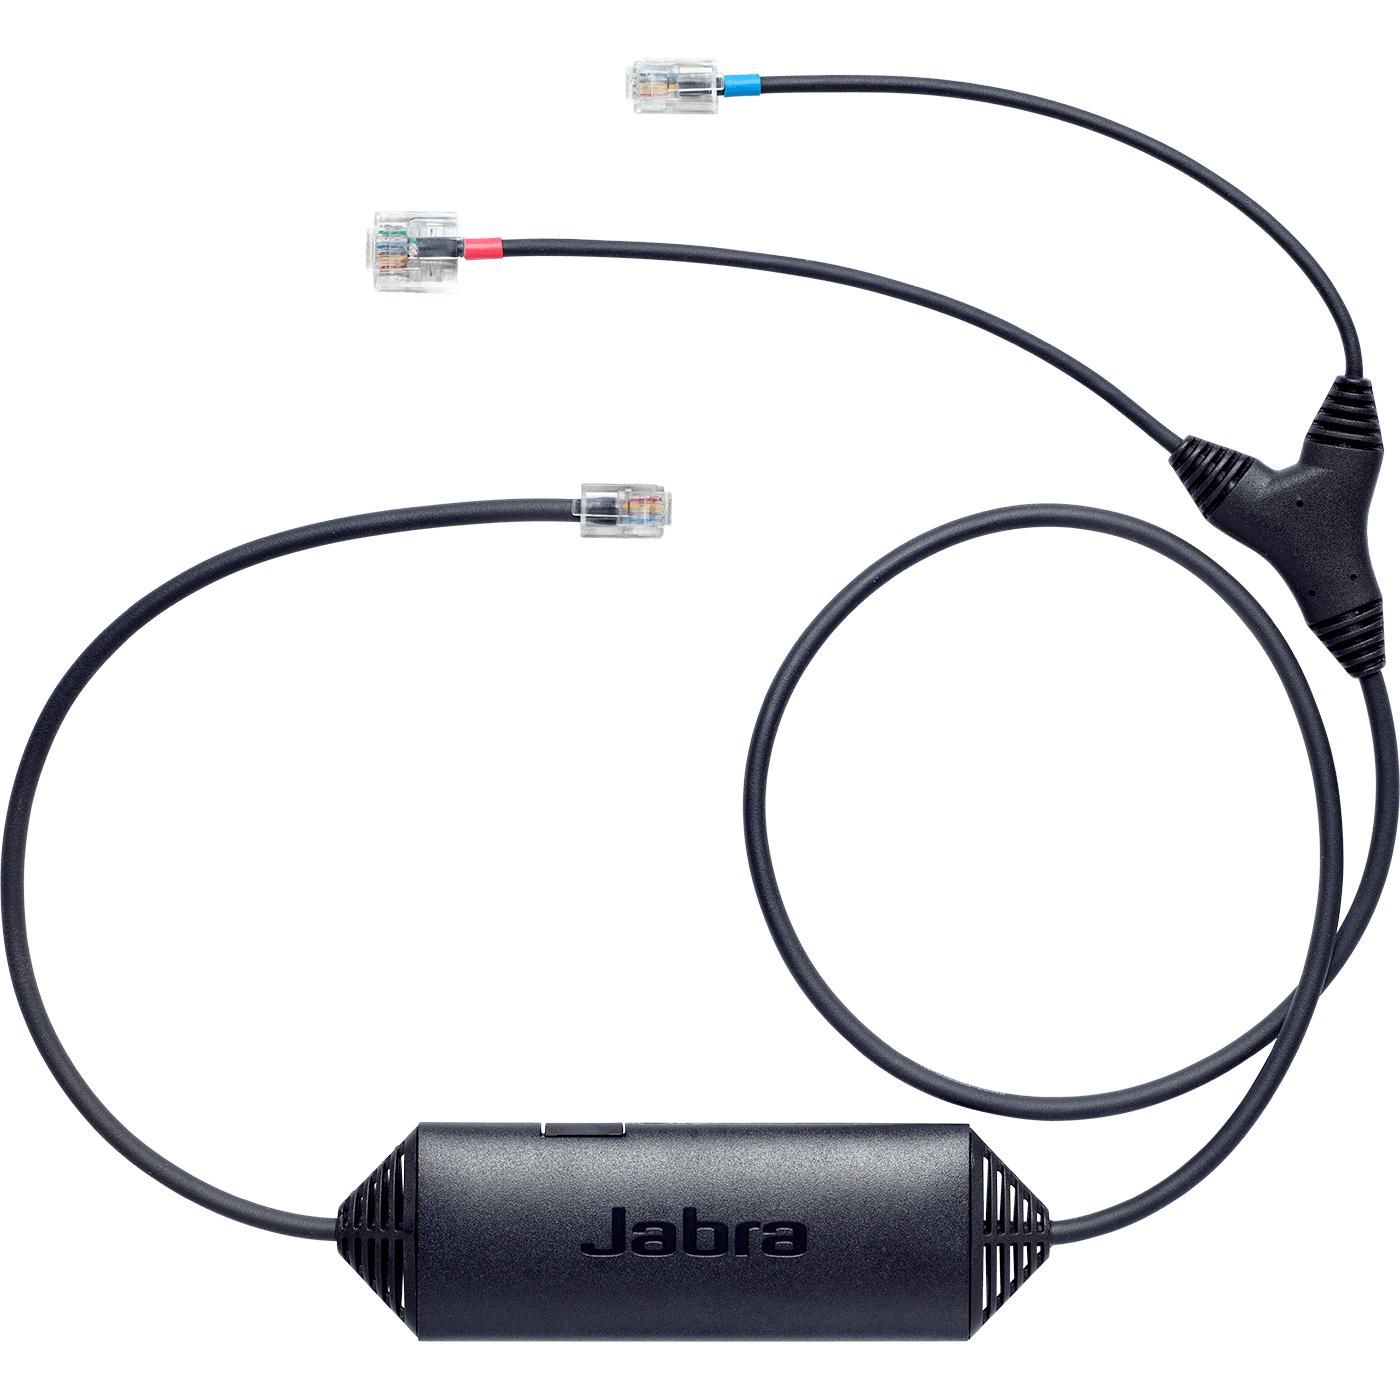 Jabra 14201-33 LINK EHD Adapter for Avaya 